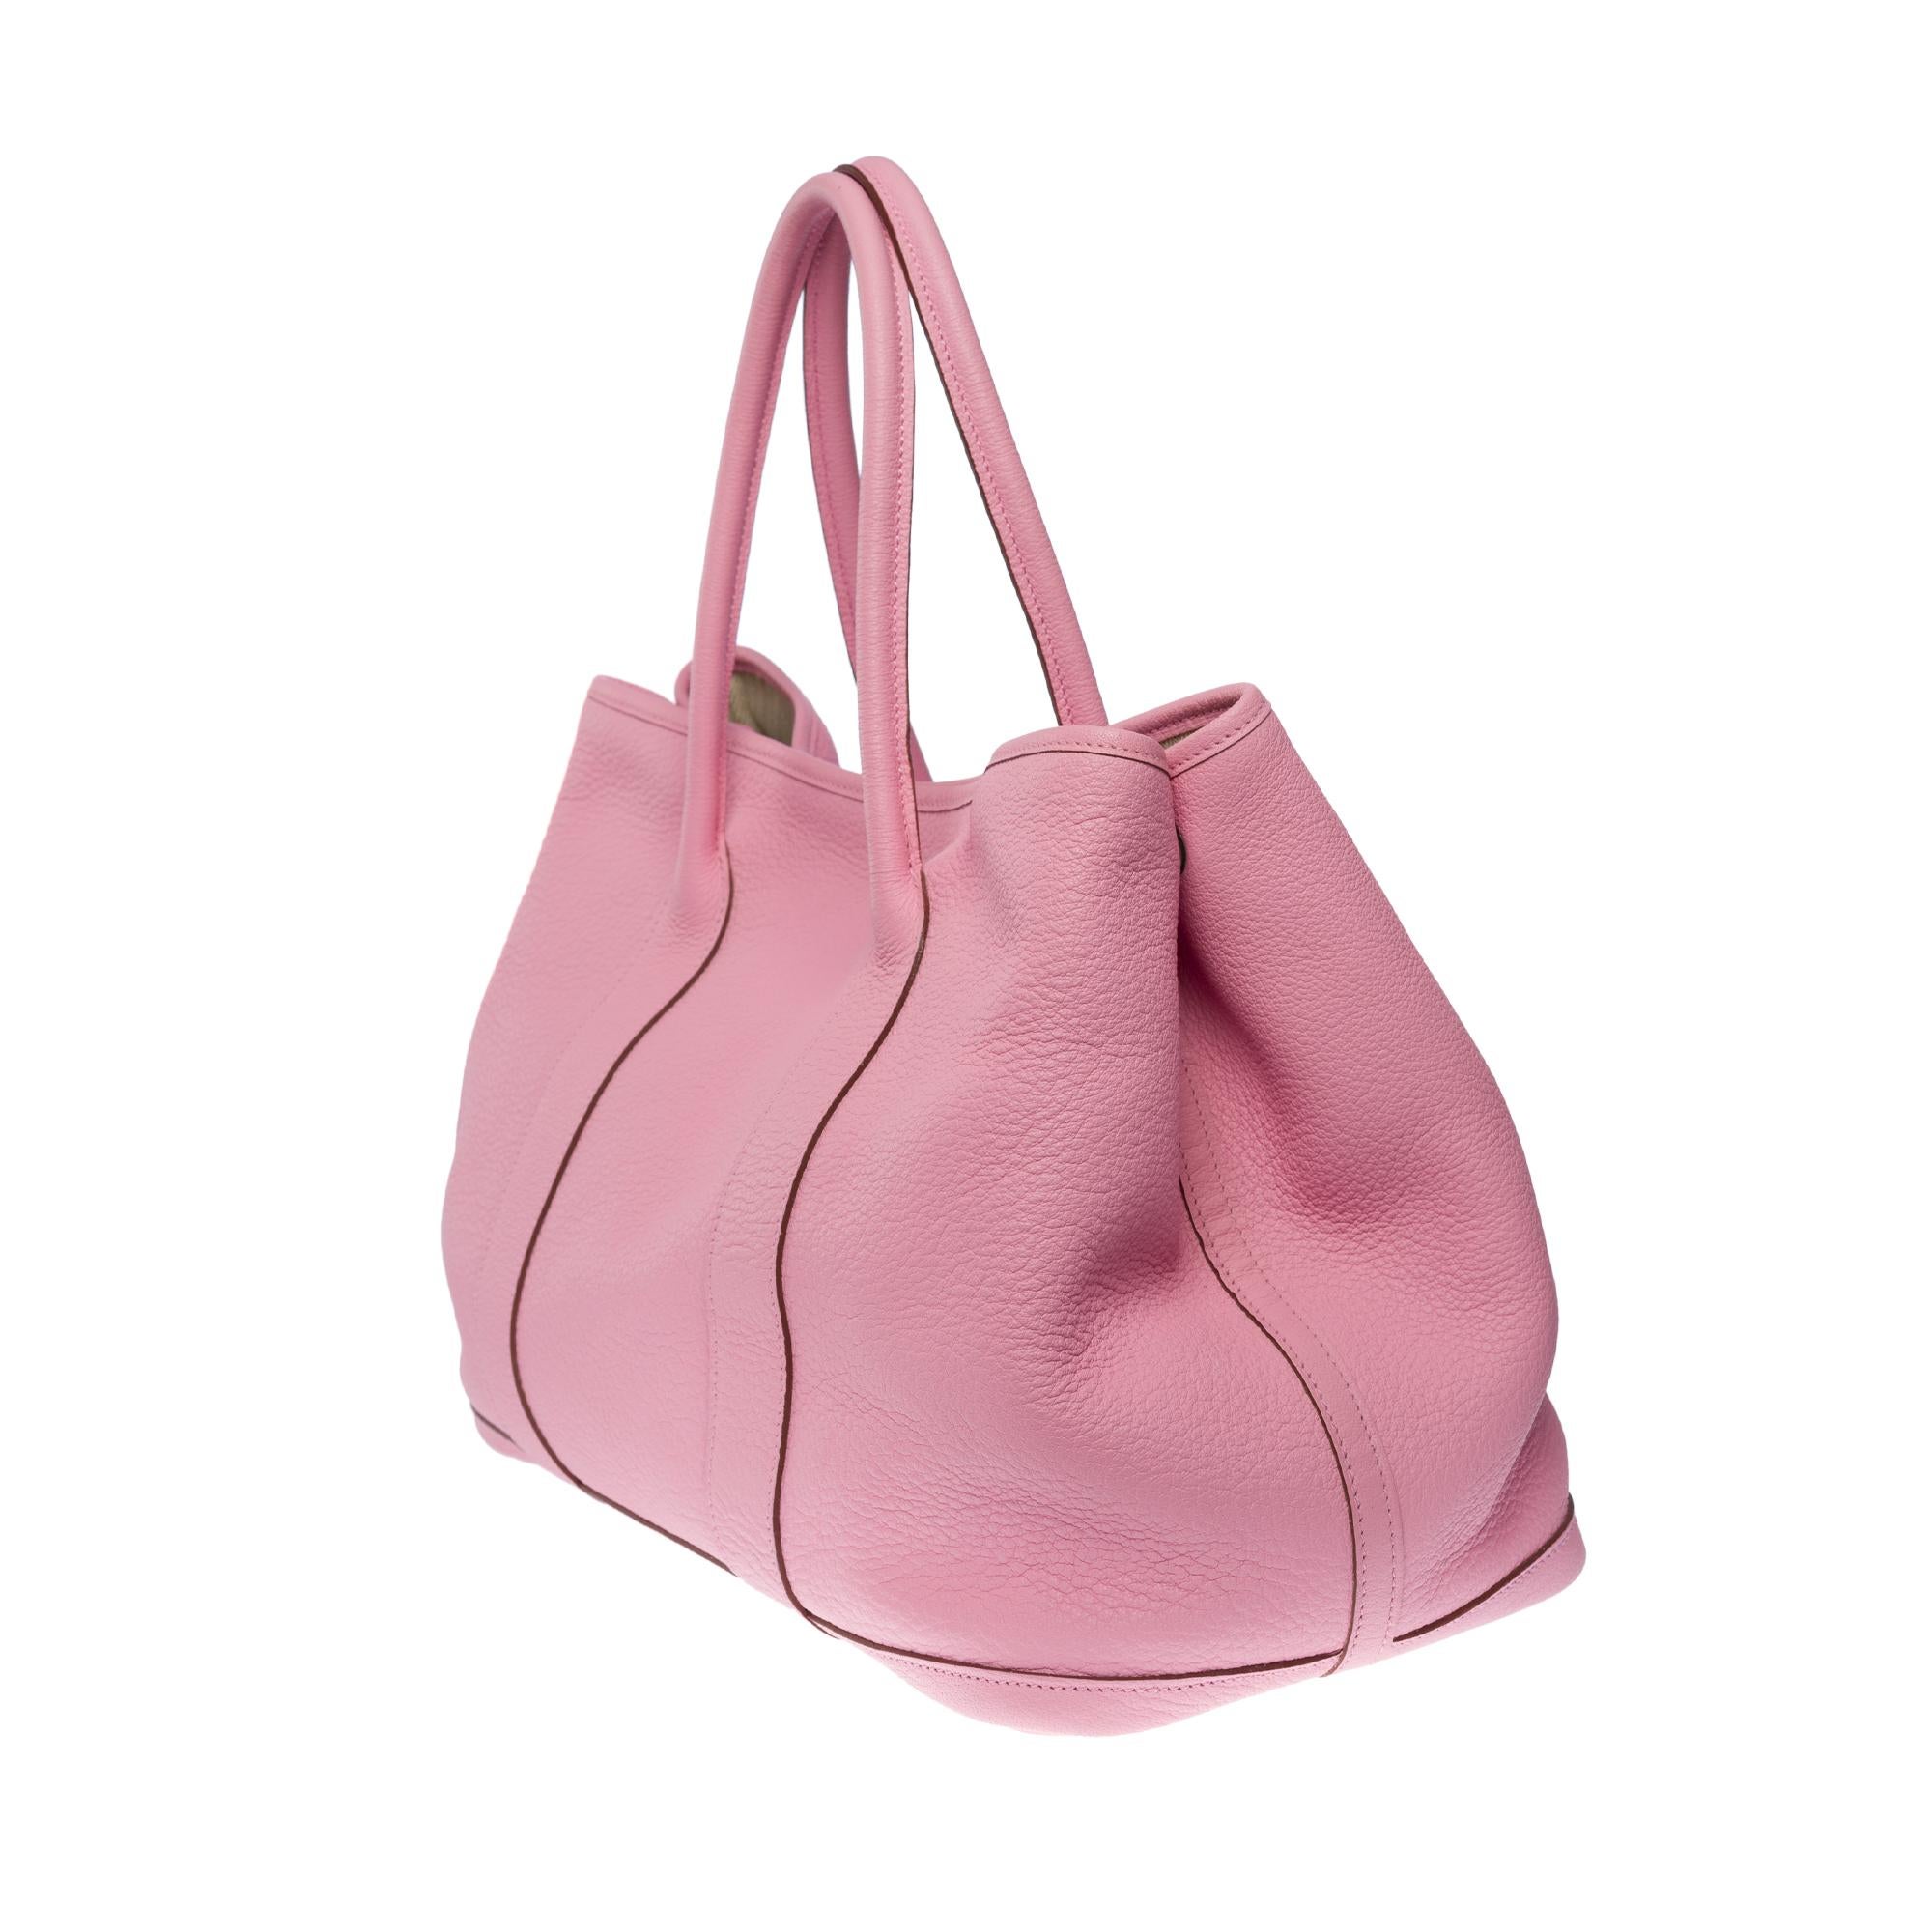 Women's Gorgeous Hermès Garden Party 36 Tote bag in Sakura Pink Negonda leather, SHW